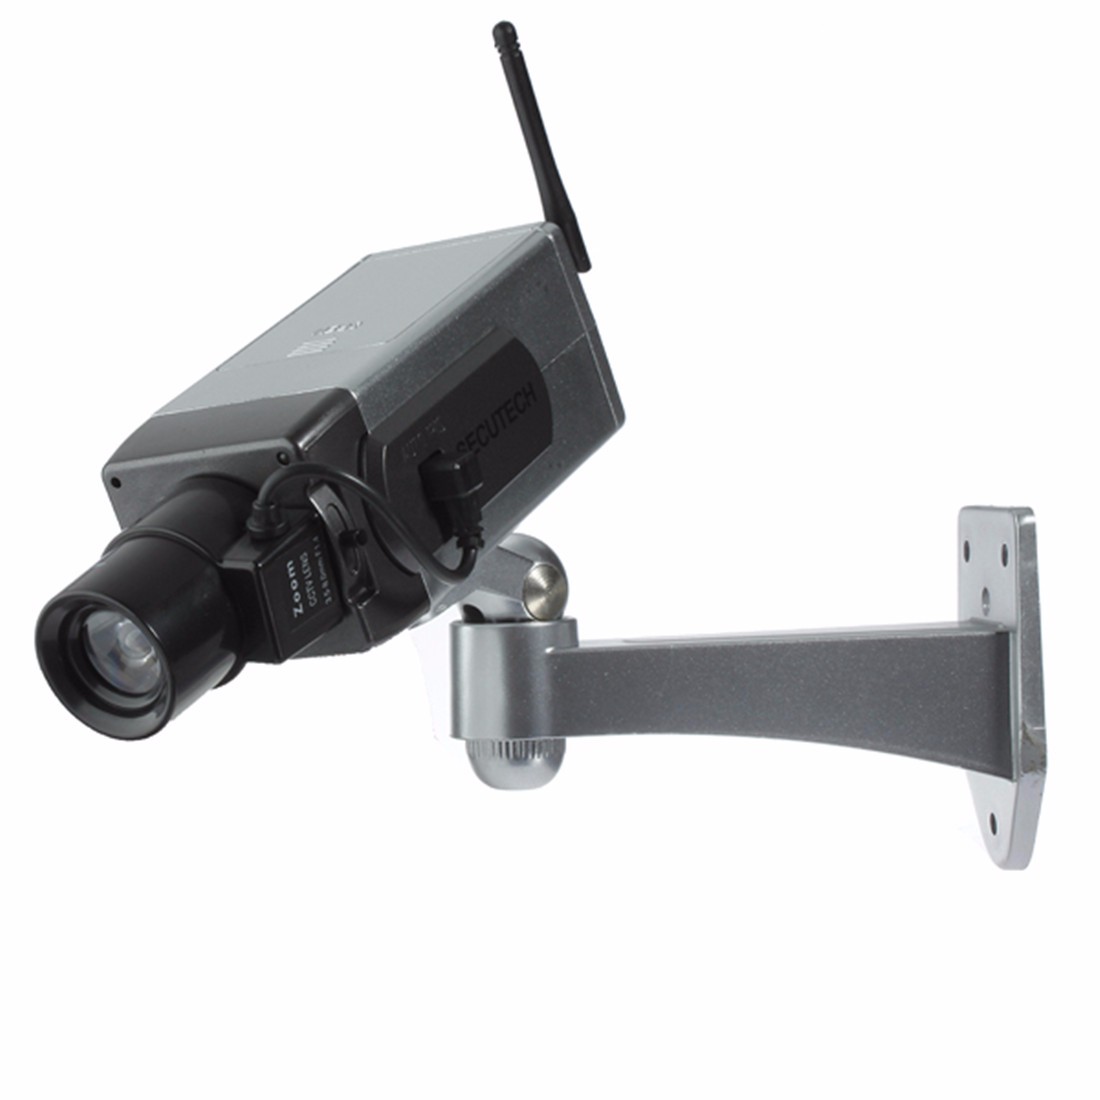 In/Outdoor Dummy Fake LED Flashing Security Camera CCTV Surveillance Imitation 12